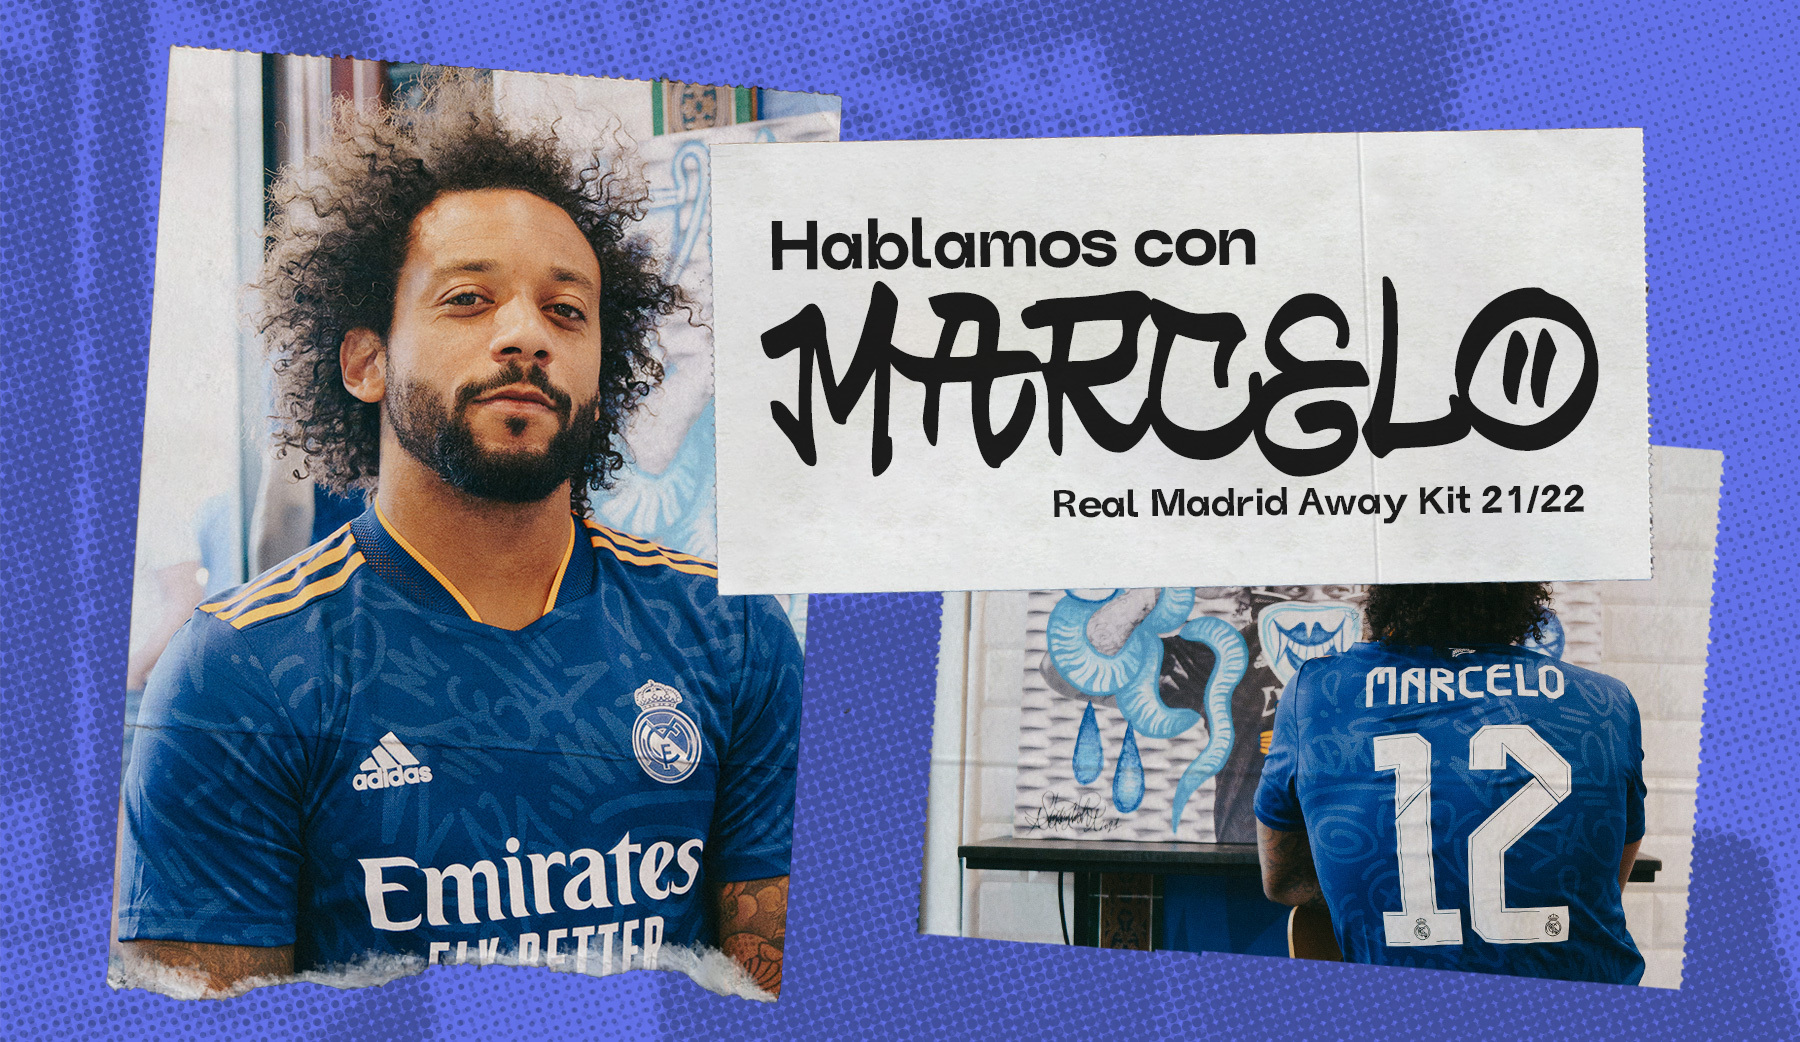 Hablamos Marcelo con motivo de la camiseta del Real Madrid x adidas - Lenders Magazine